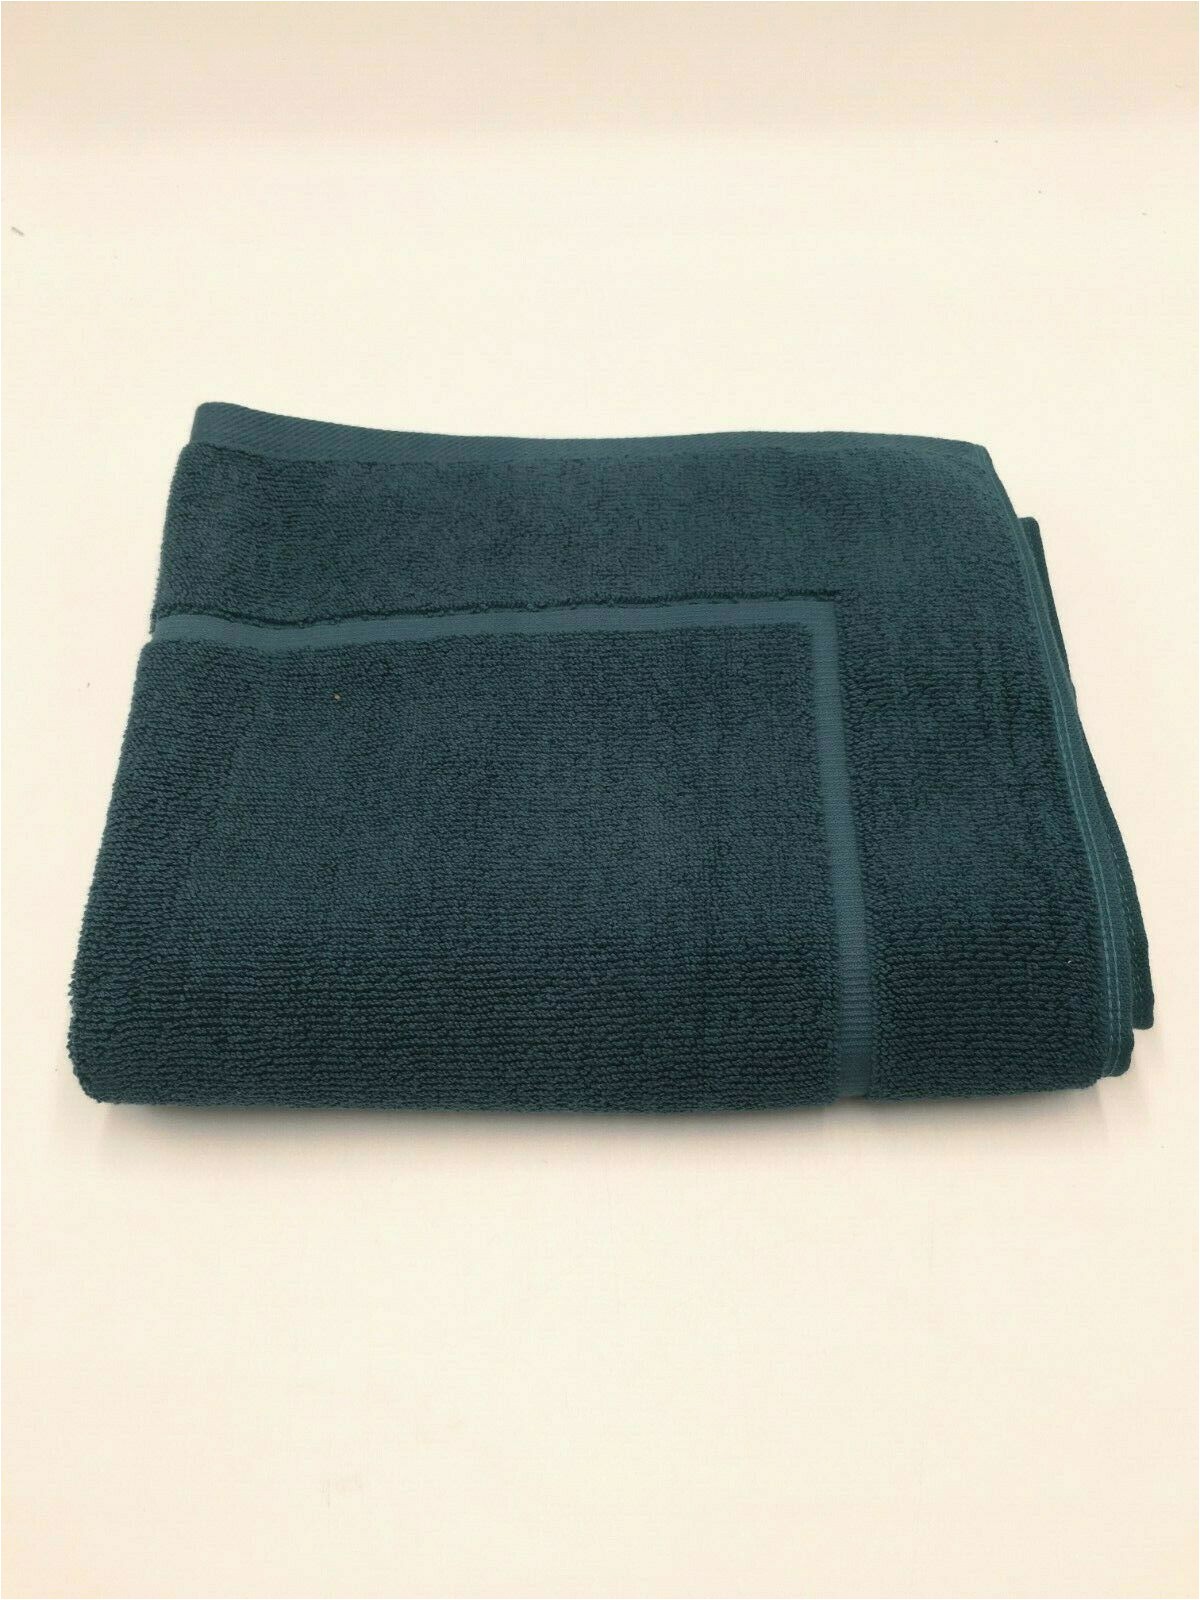 Wamsutta Perfect soft Micro Cotton Bath Rug Wamsutta Ultra soft Micro Cotton Bath towels In Teal Create Your Set